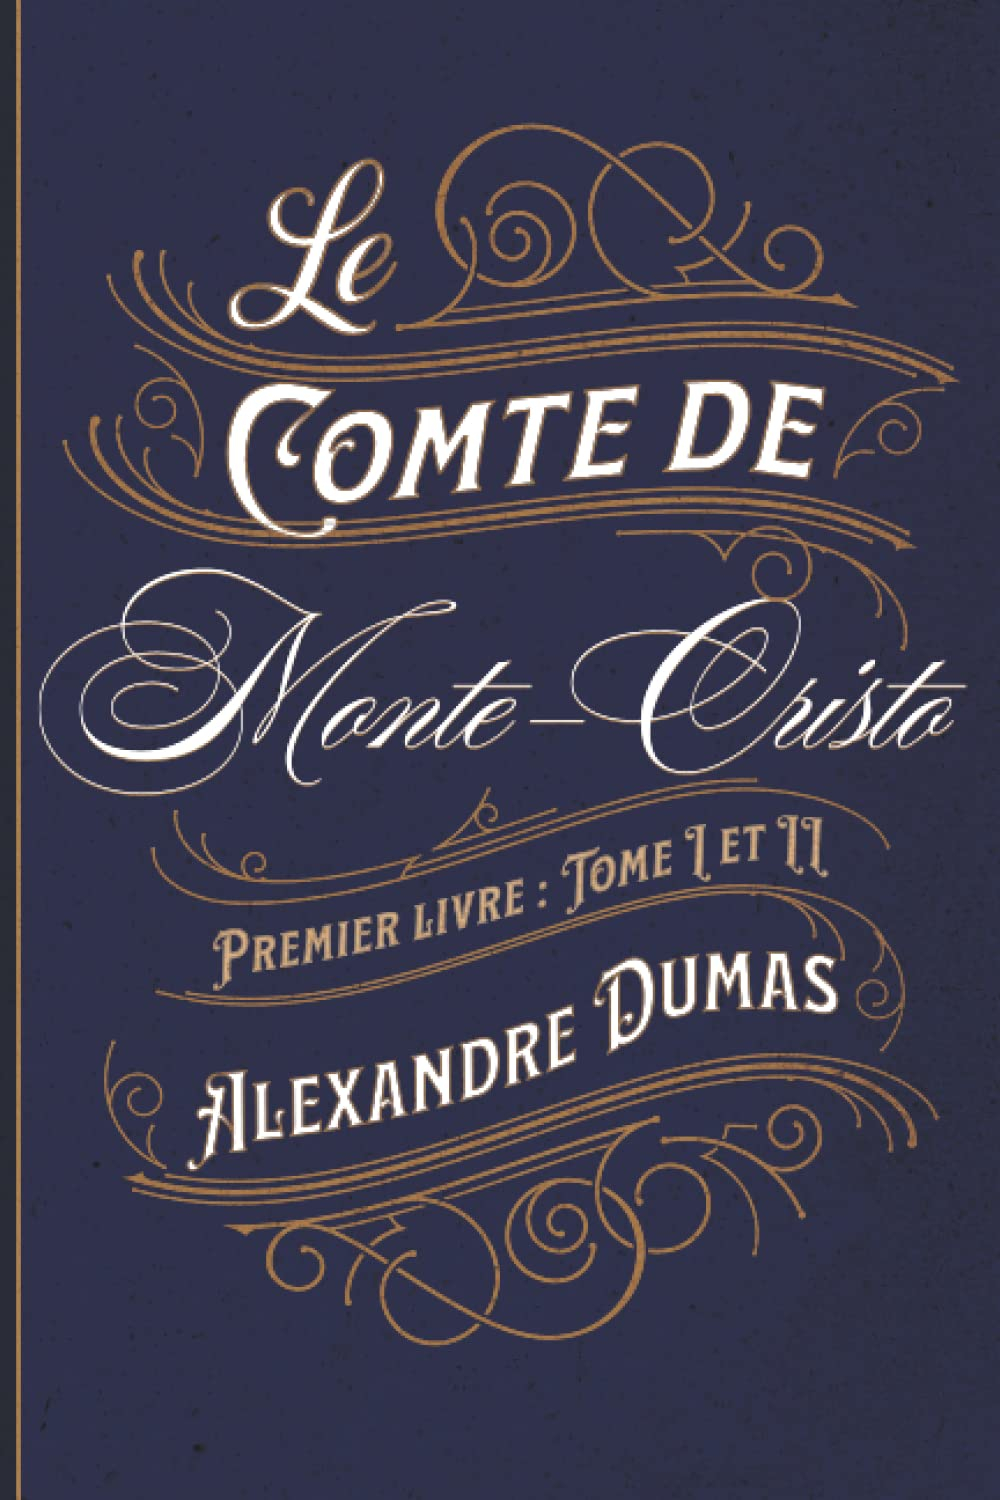 Le Comte de Monte-Cristo Premier livre : Tome I et II: Classic collector